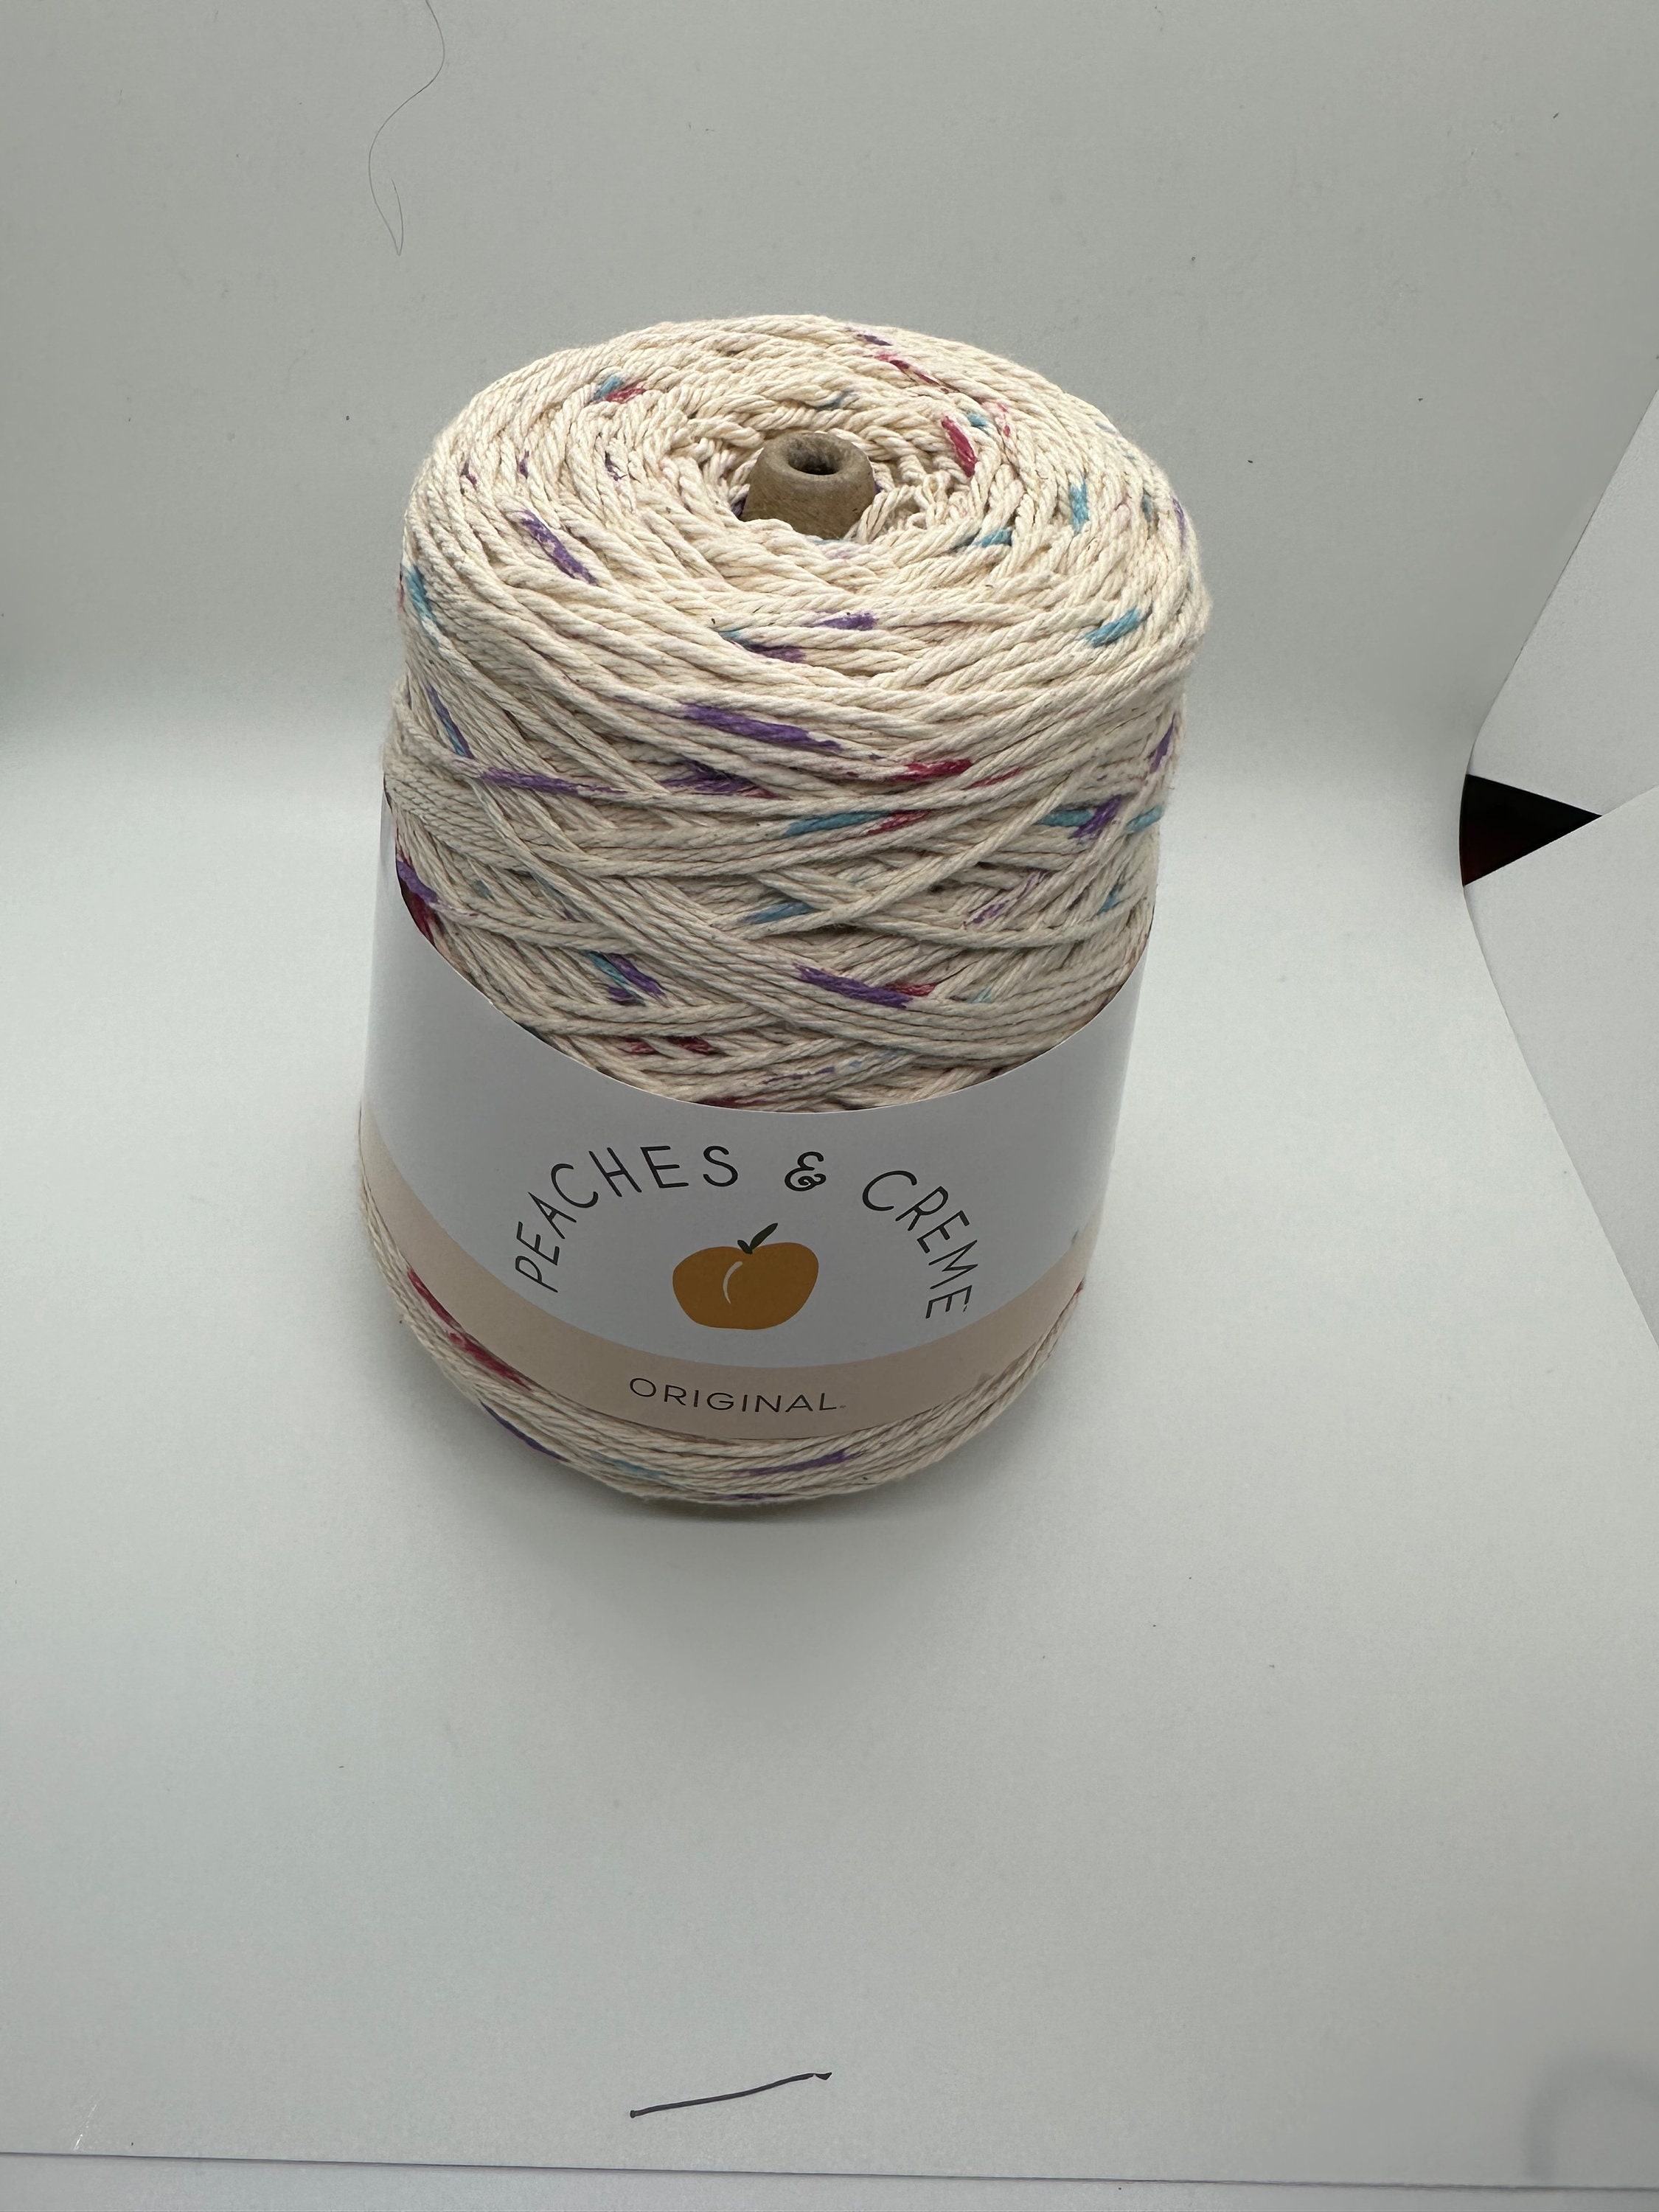 Peaches & Creme Cone 4 Medium Cotton Yarn, Seabreeze 14oz/400g, 674 Yards 